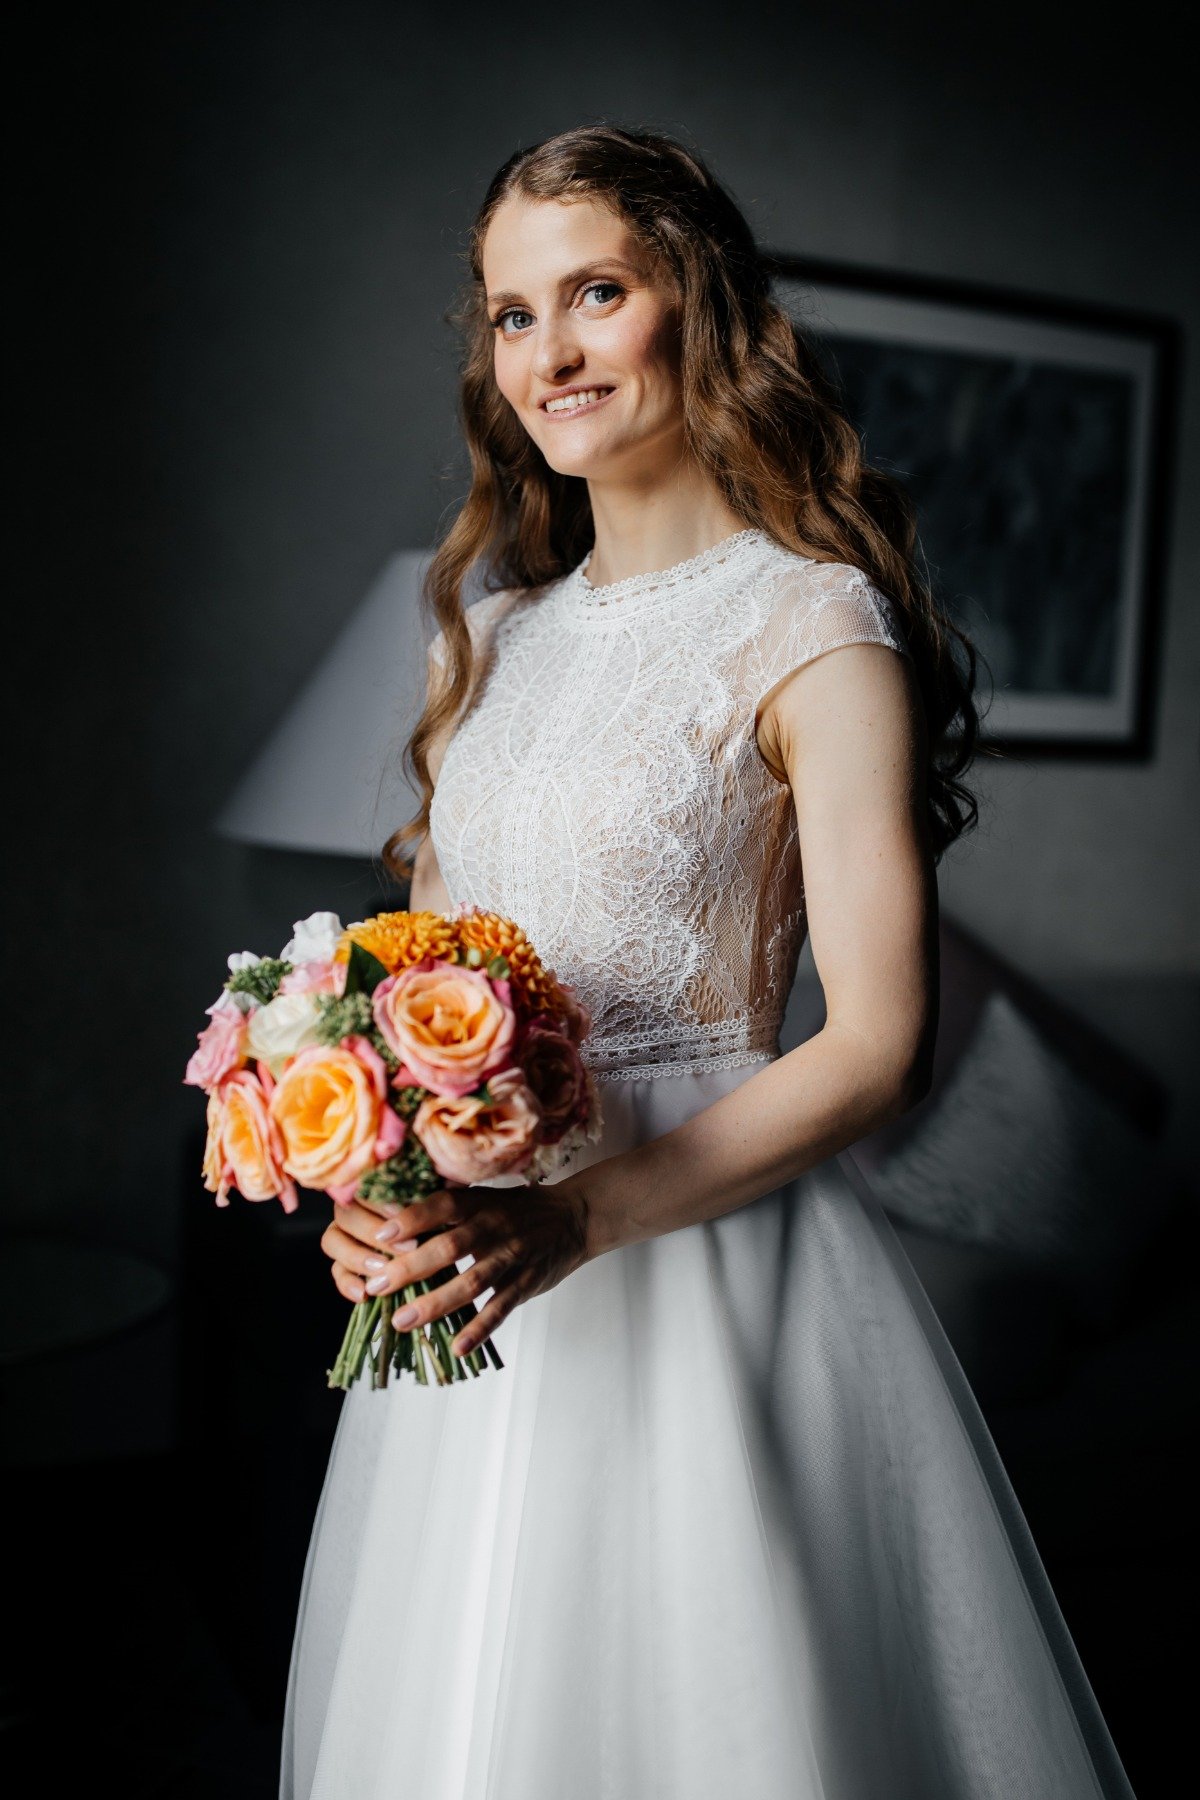 lace cap sleeve wedding dress with round wedding boquuet